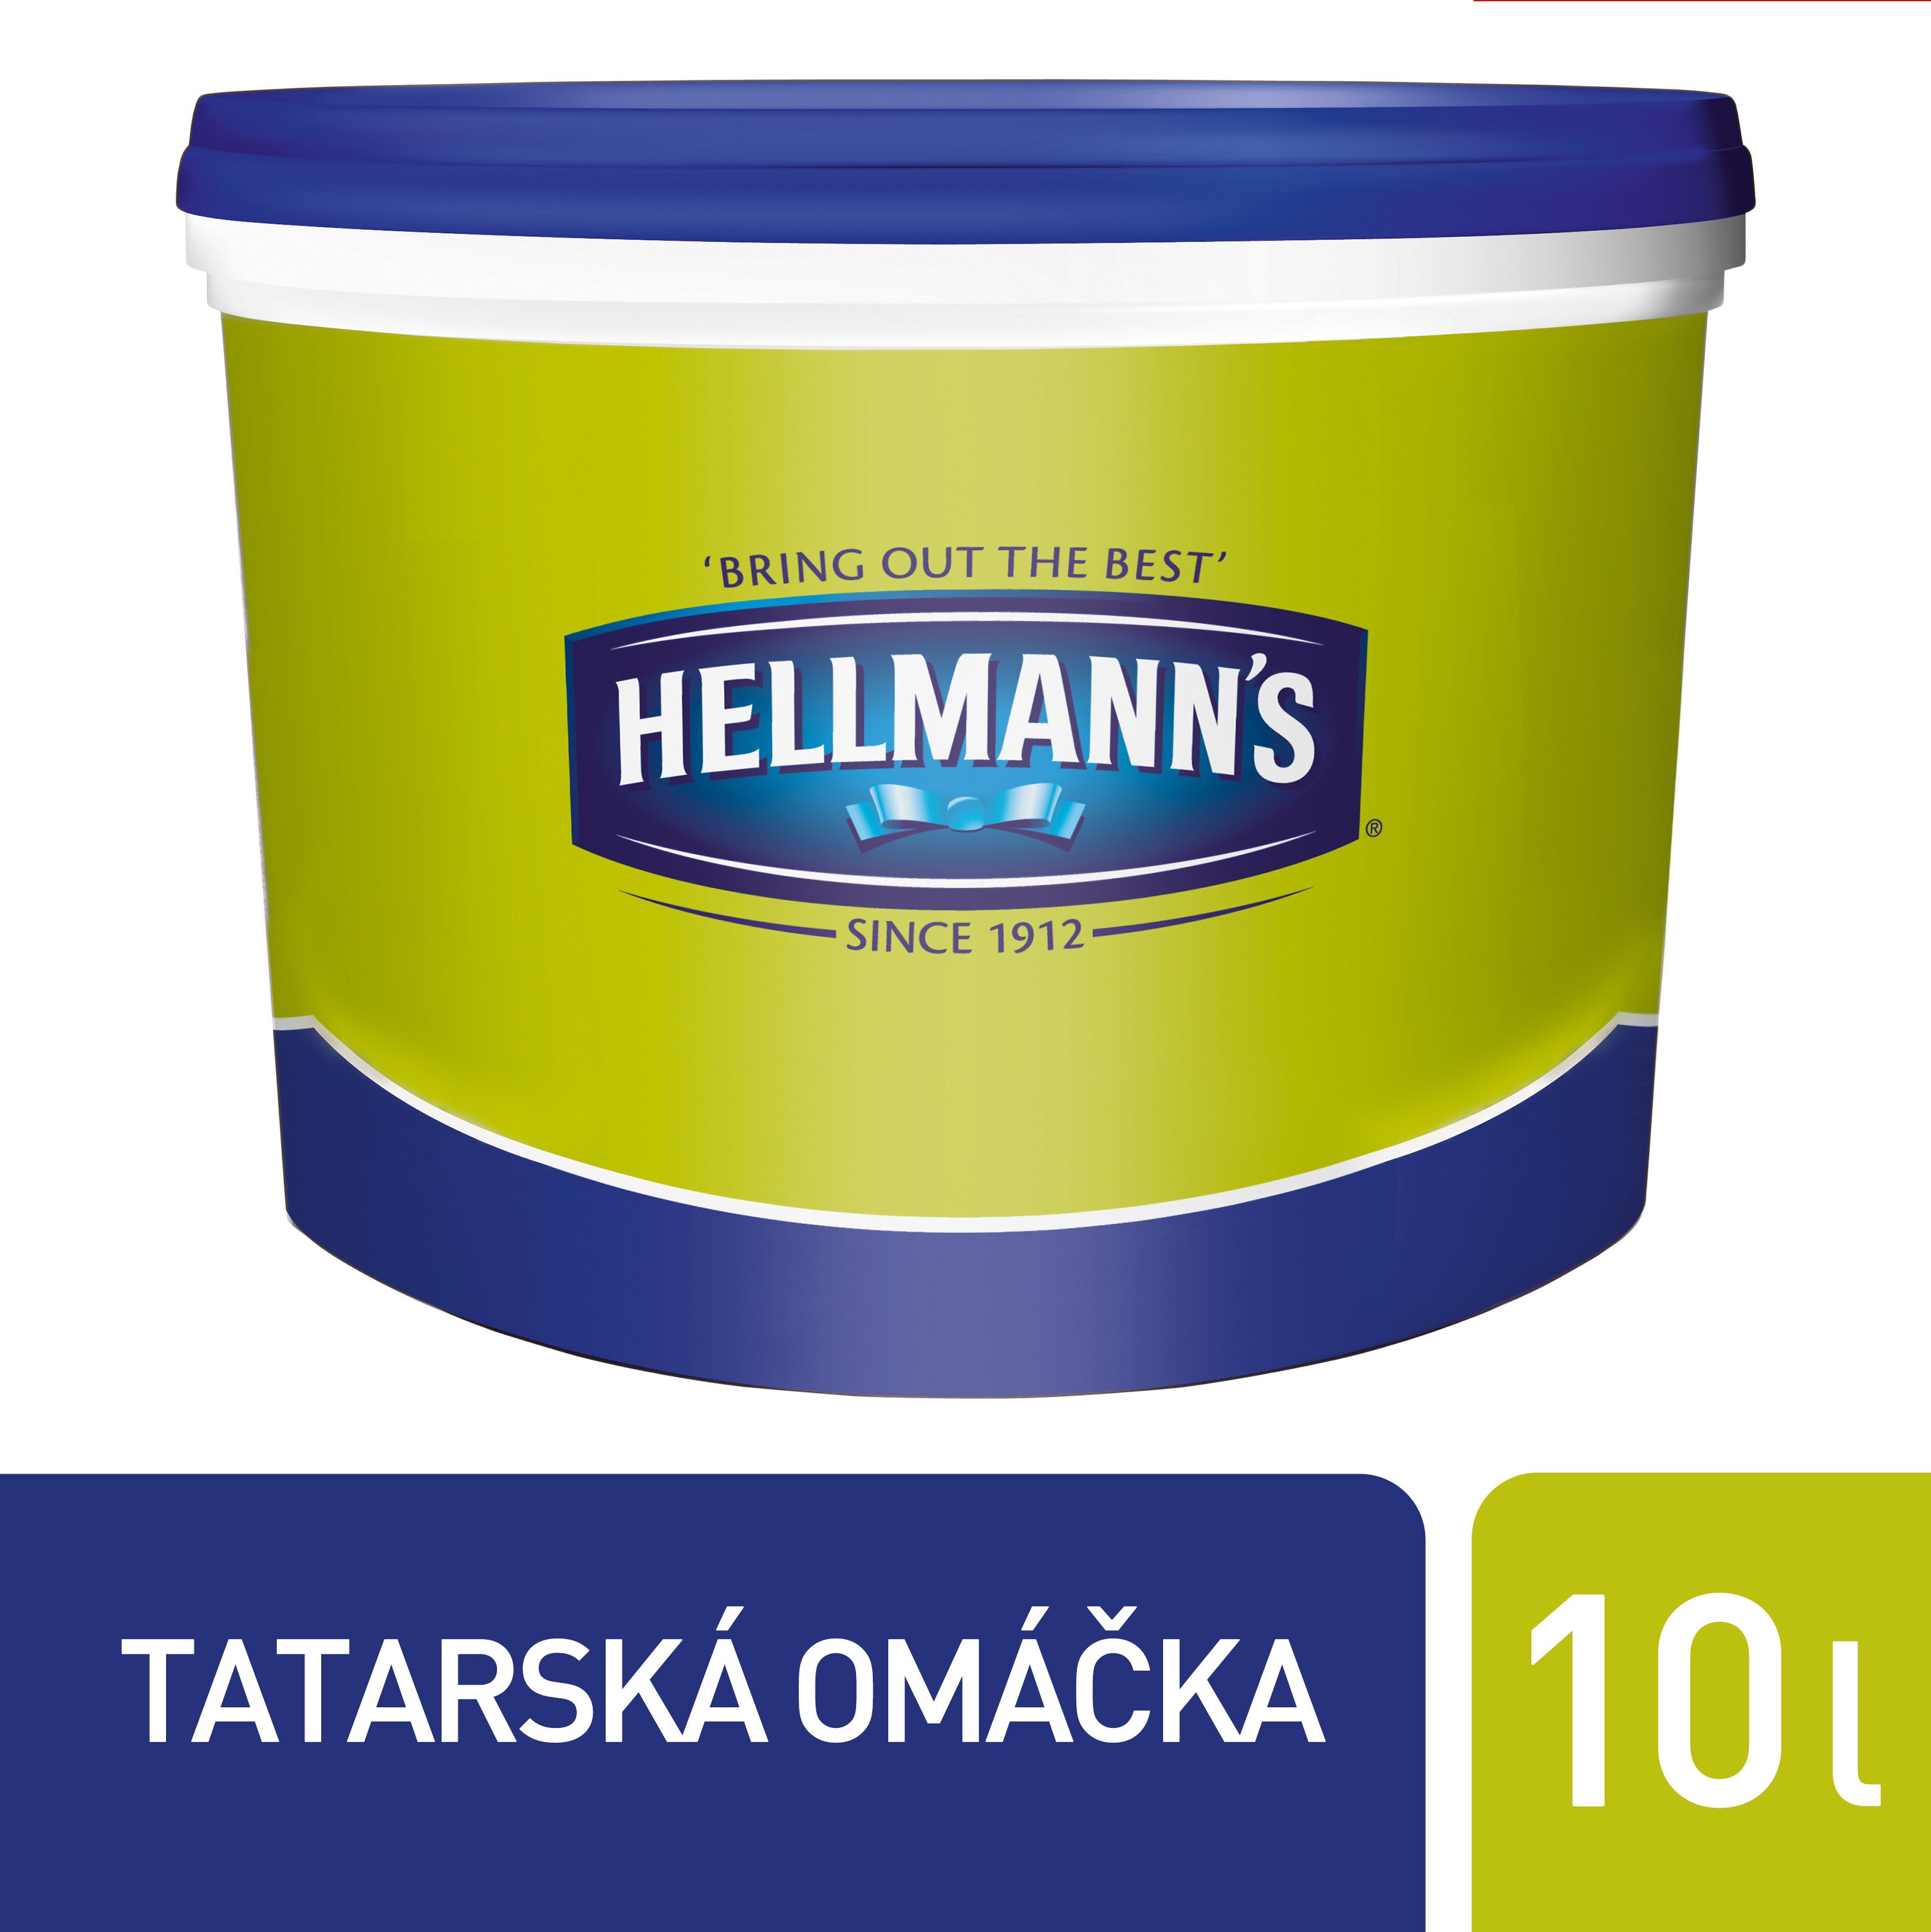 Hellmann's Tatarská omáčka 10 l - 